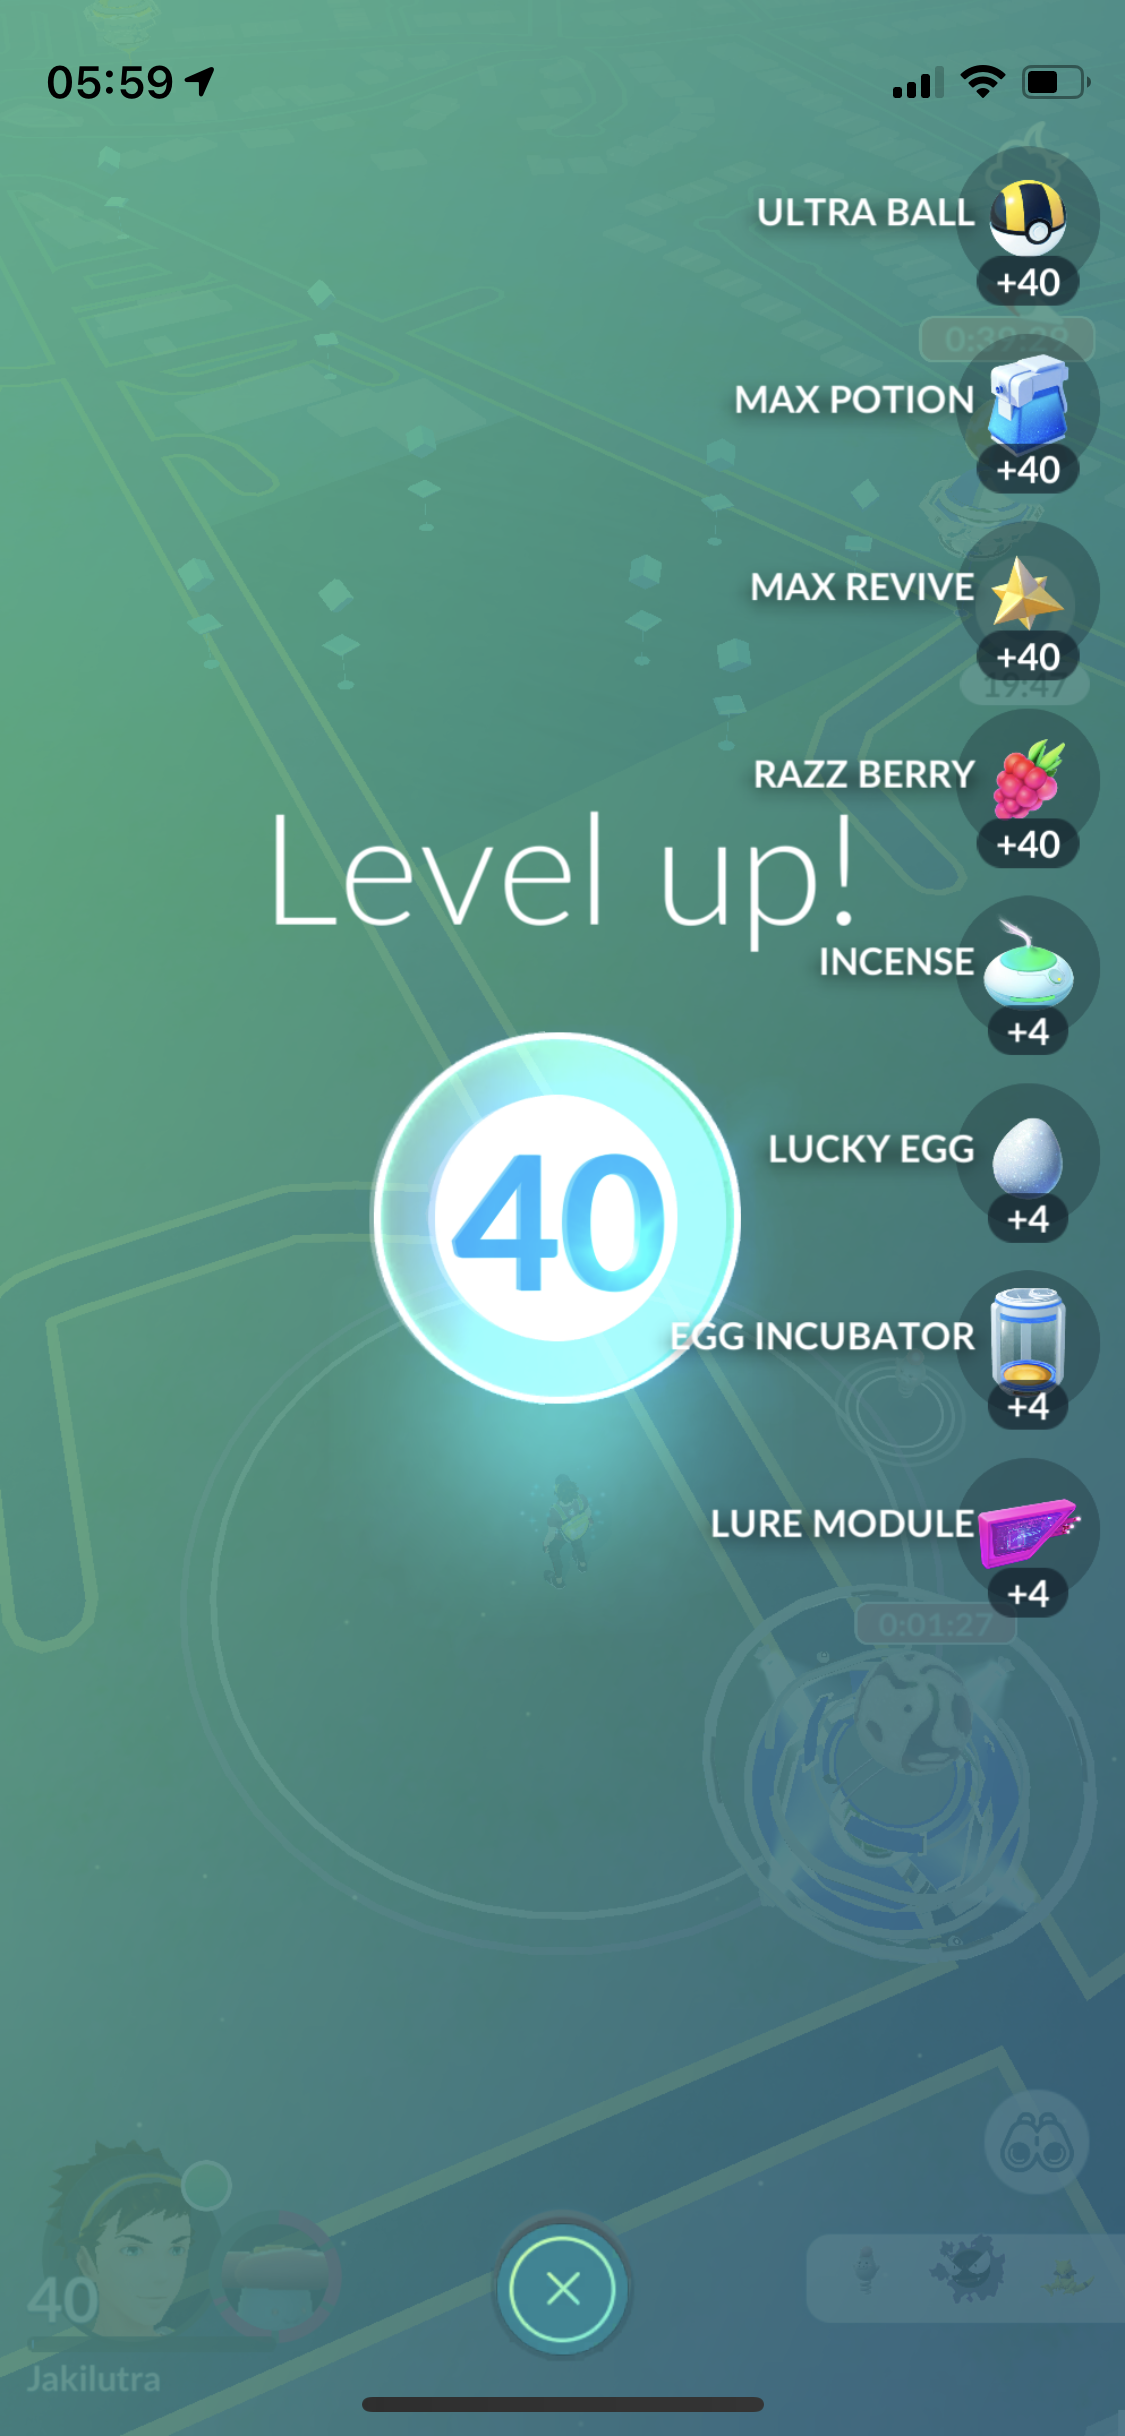 Pokémon GO Progress #1: Level 40!